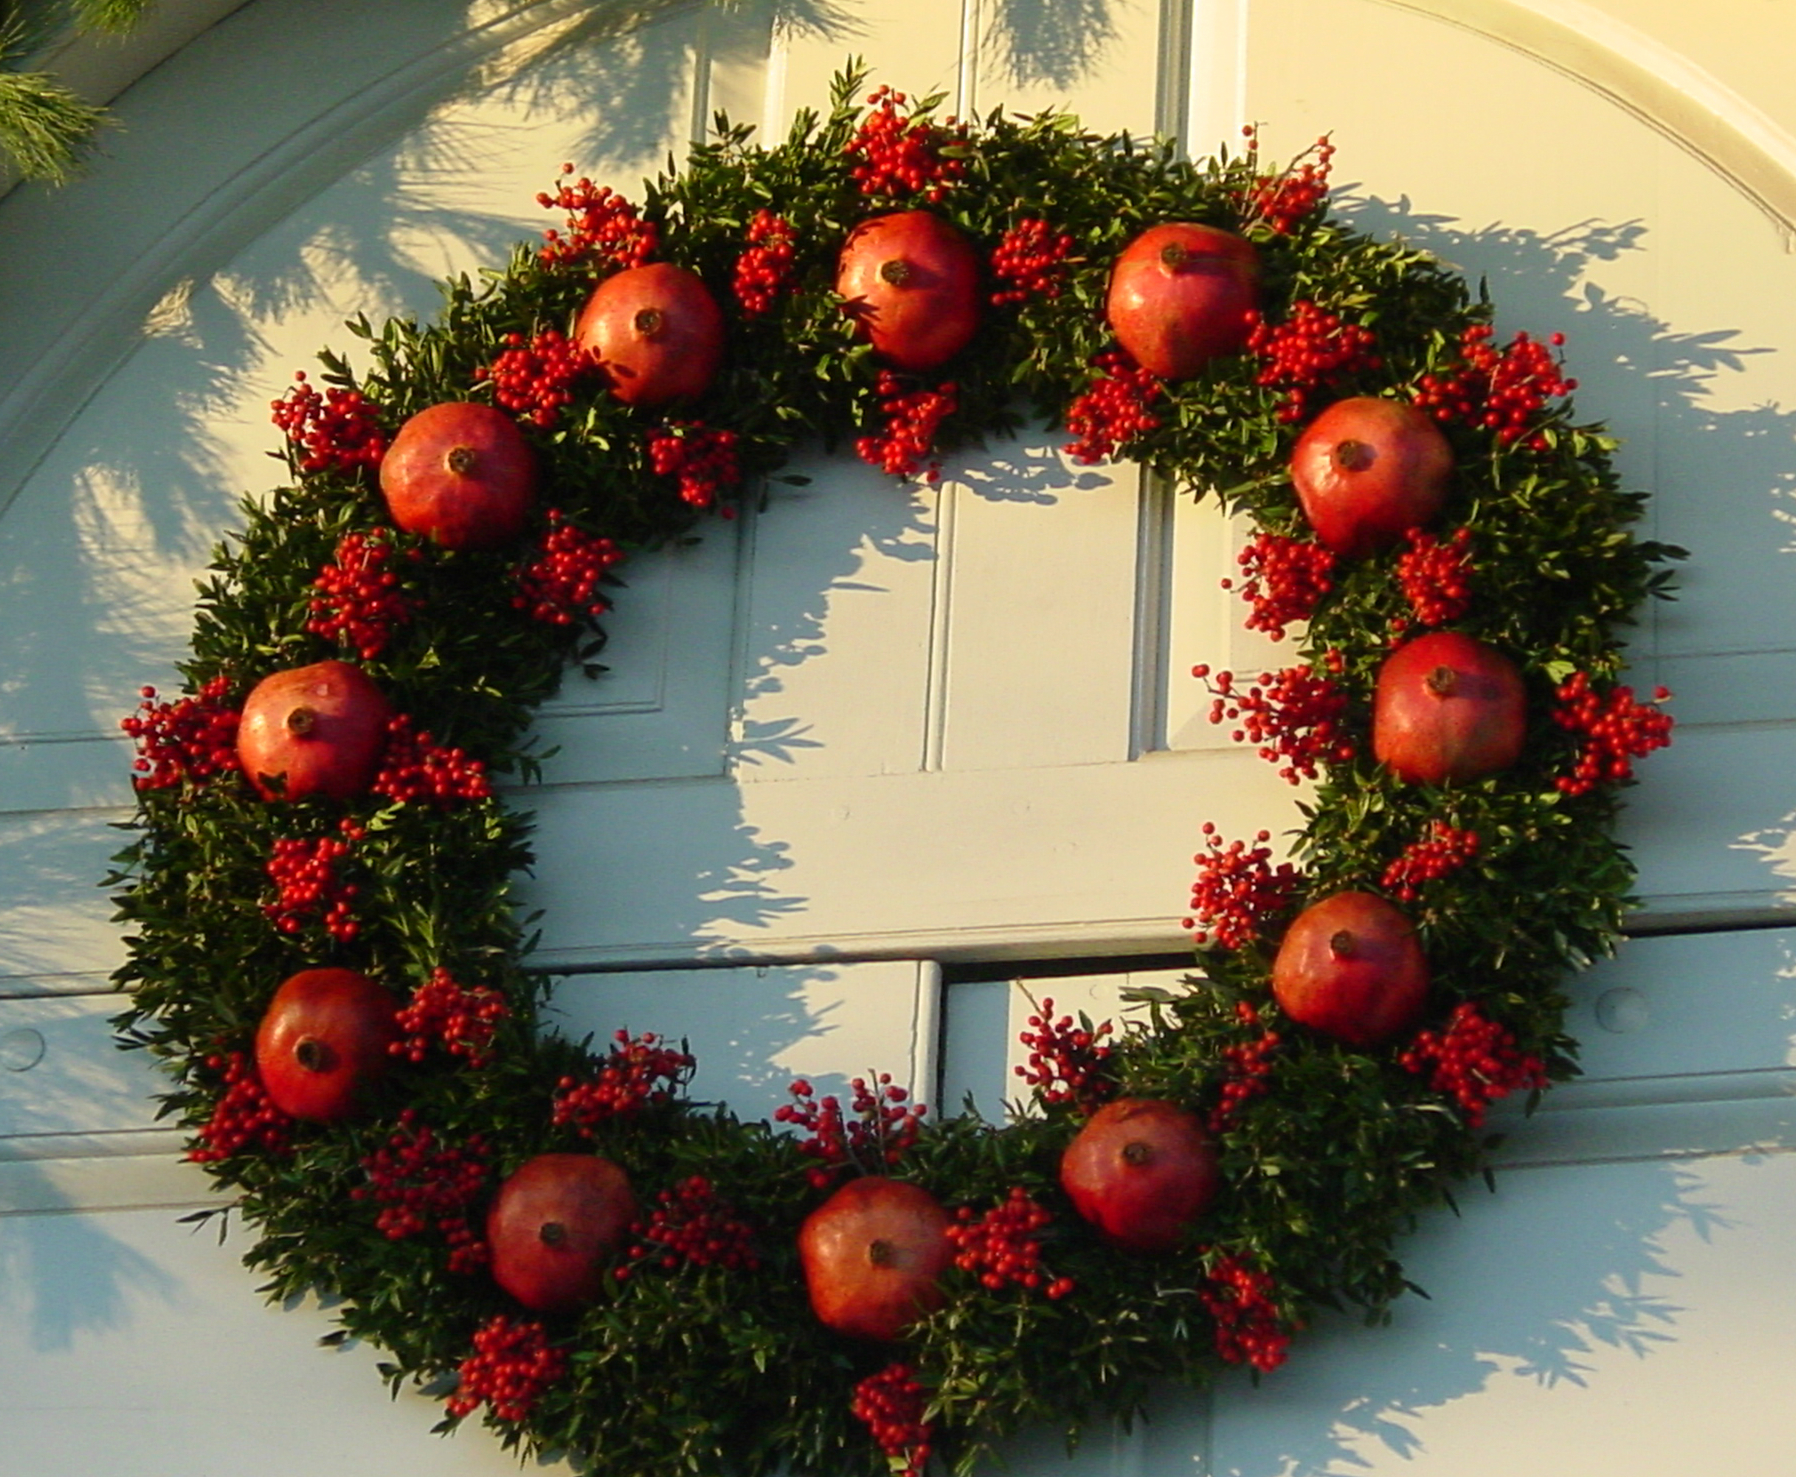 Bibelot Artificial Christmas Wreath with Red Berries Pine Cones Red Balls Decorations Winter Wreath for Front Door Wall Home Decor 20in